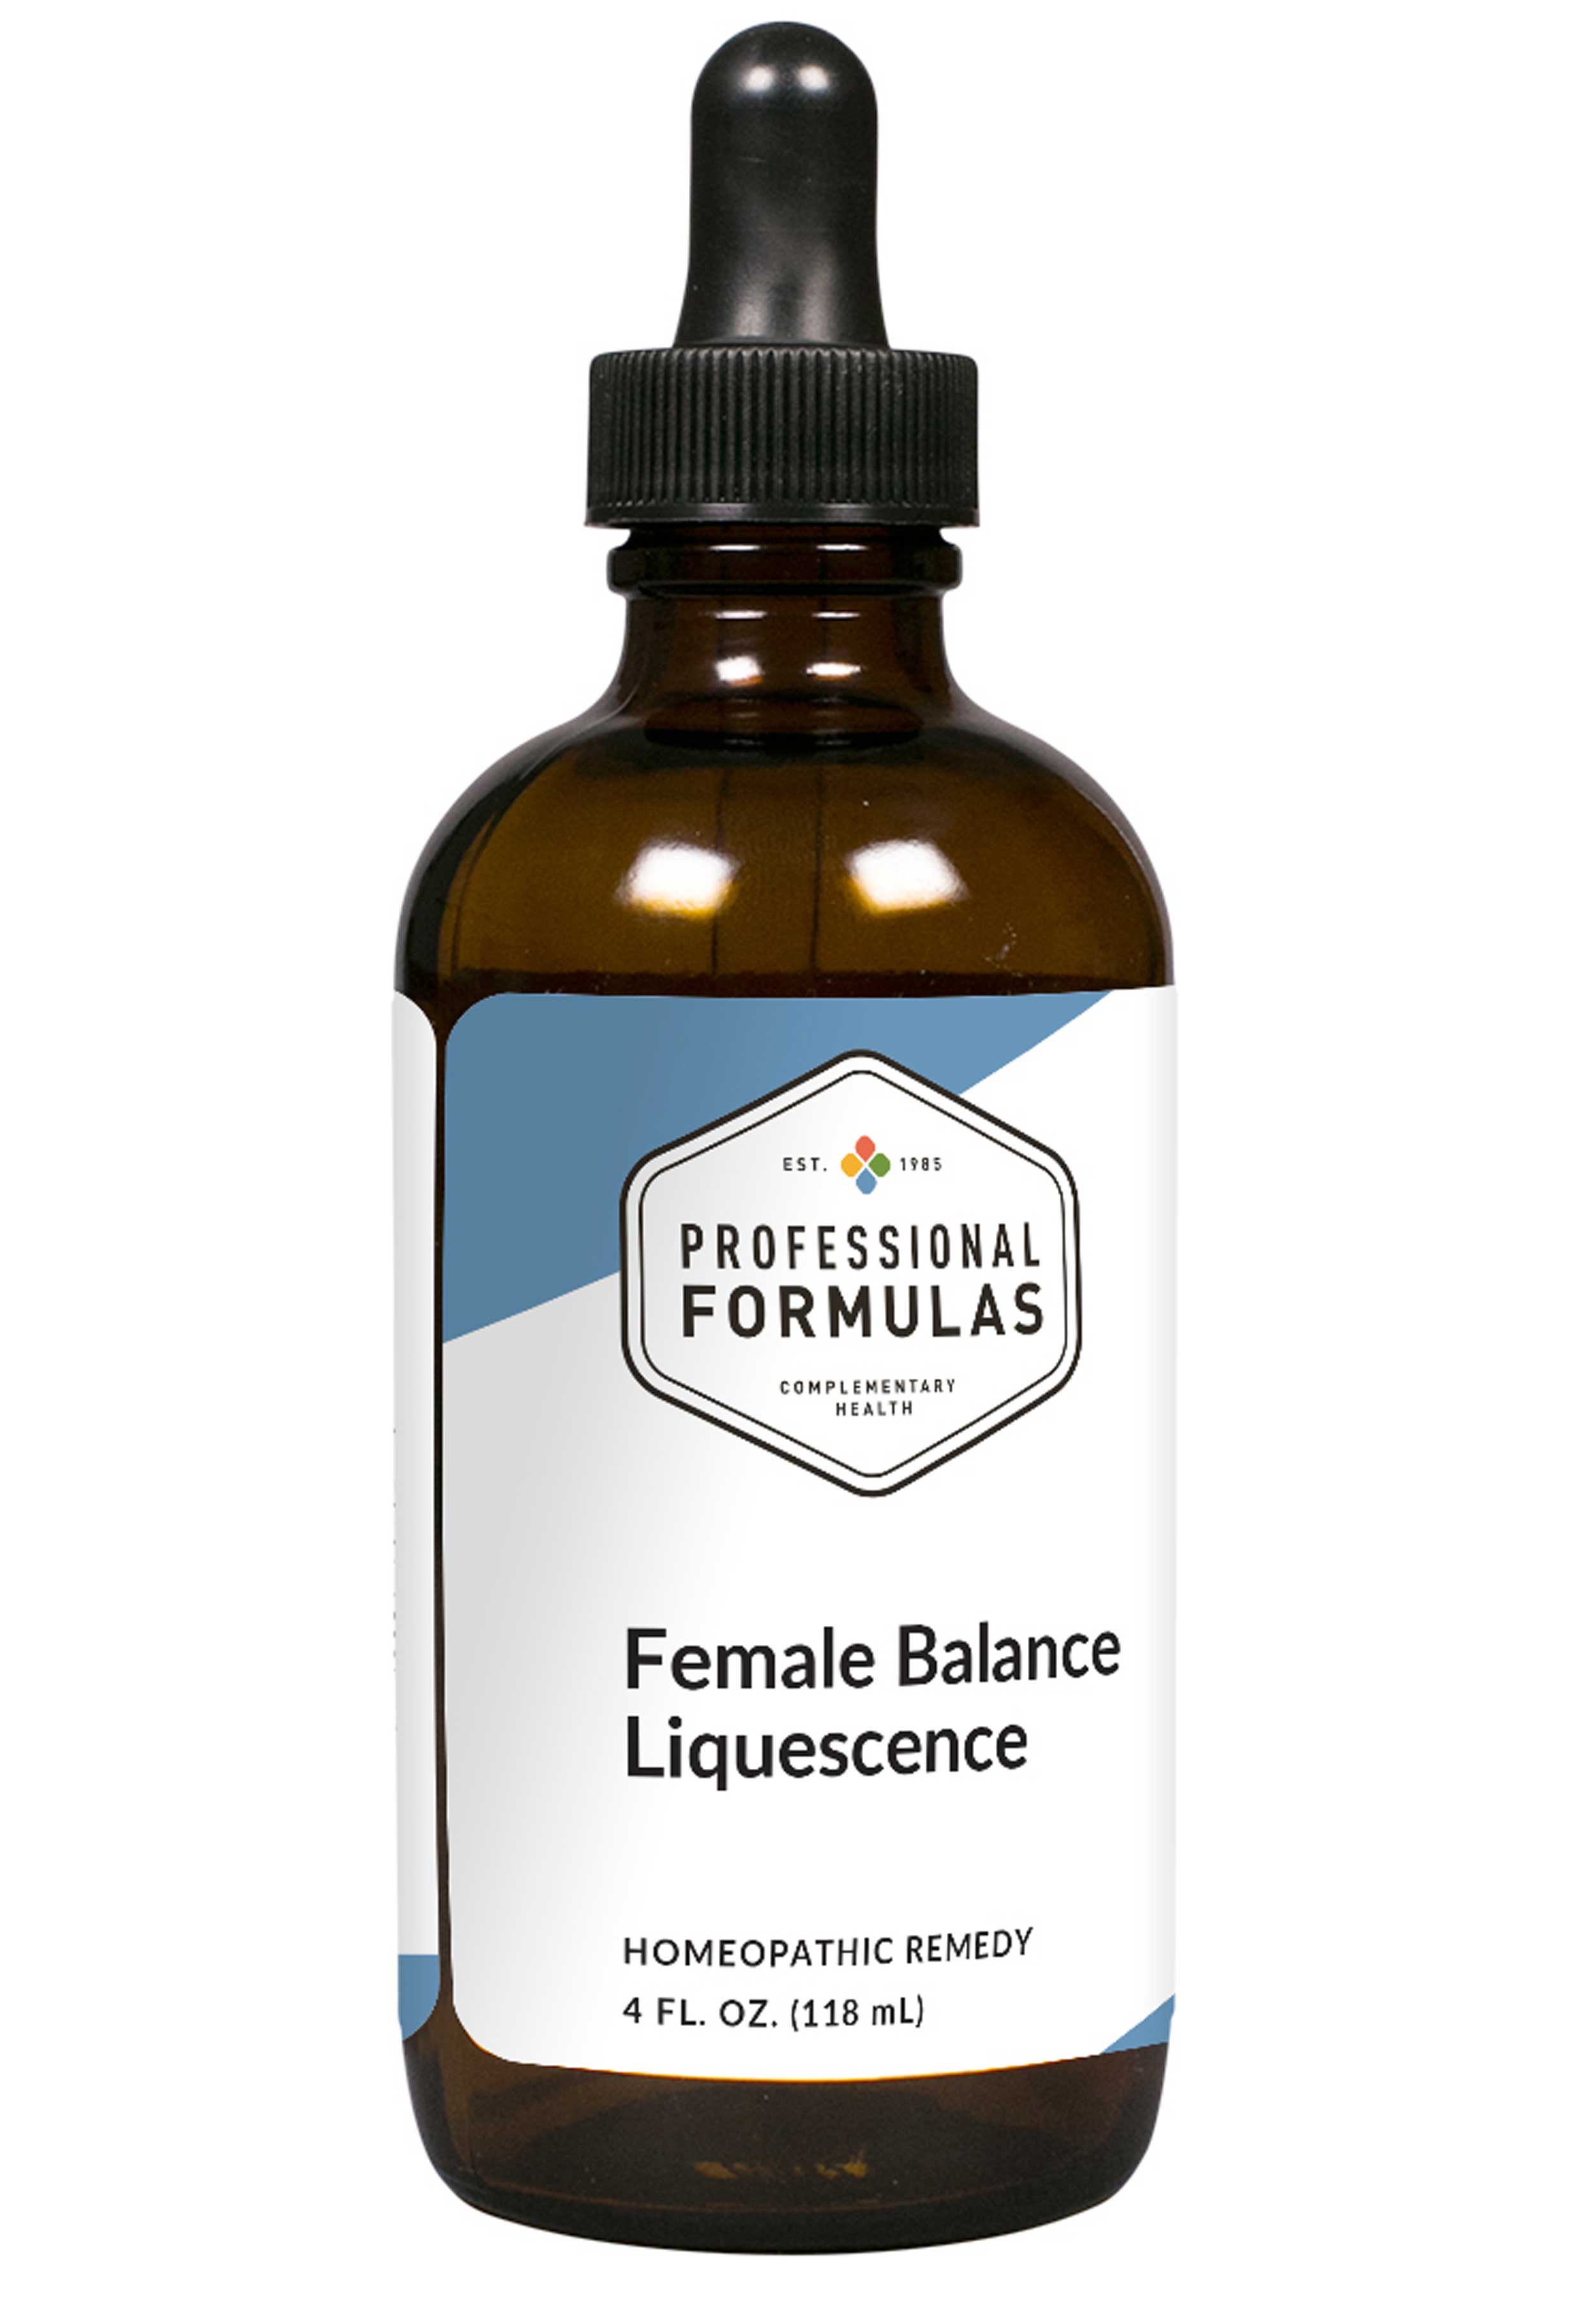 Professional Formulas Female Balance Liquescence